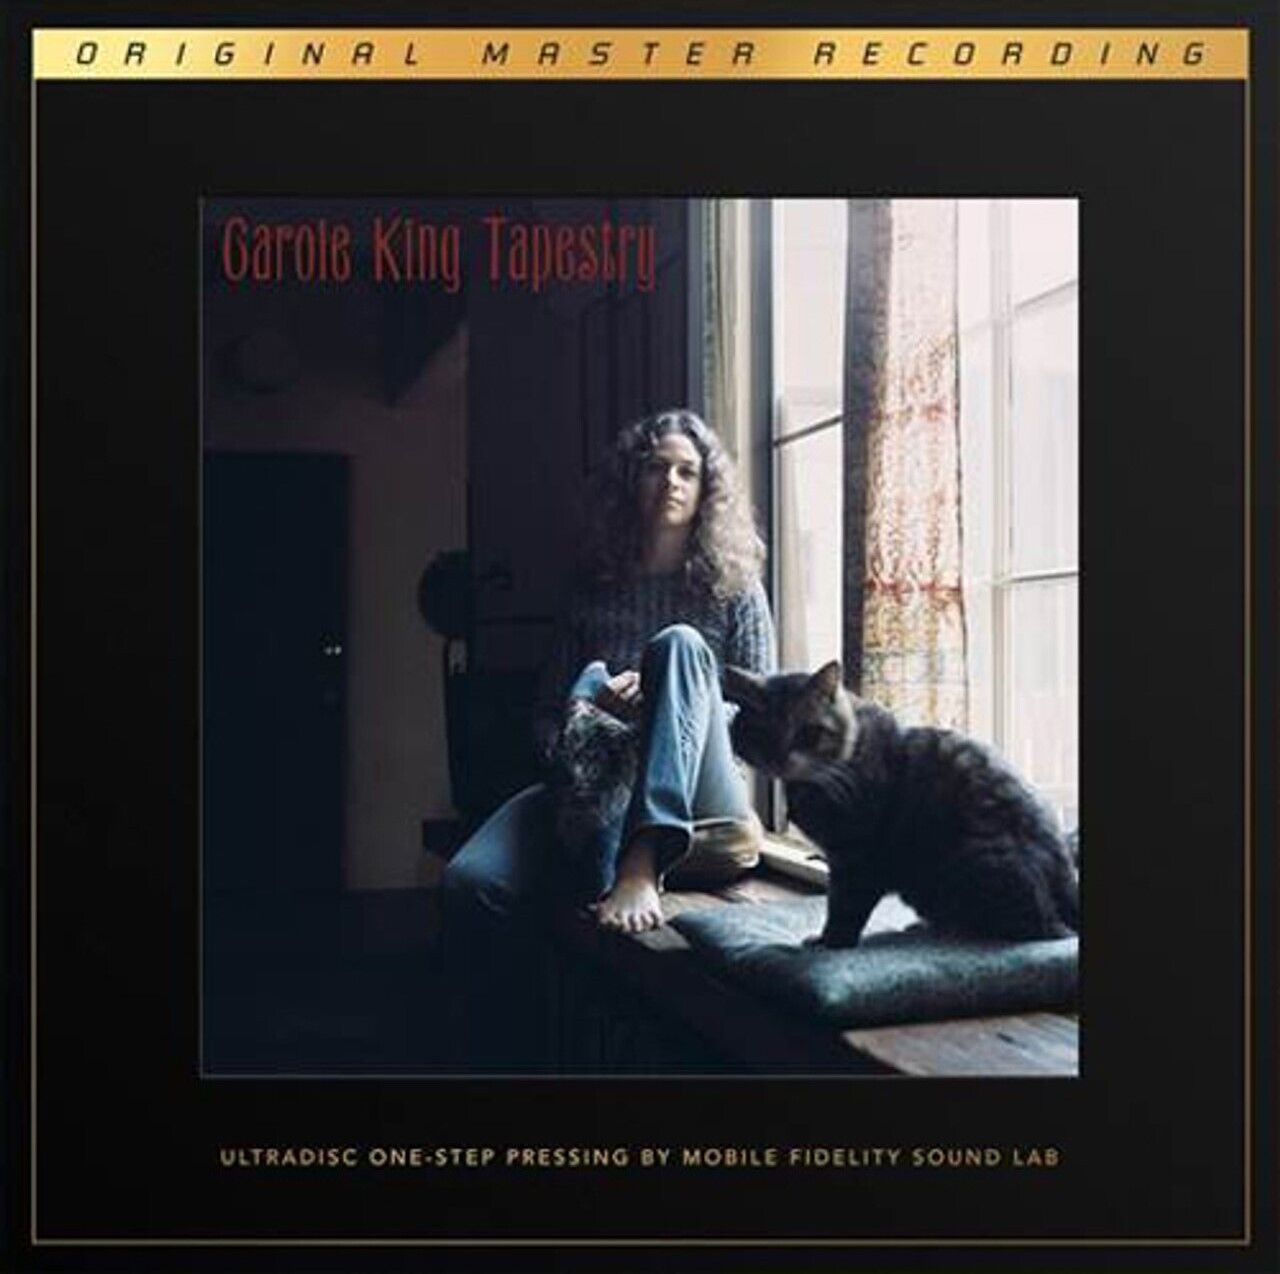 Carole King-Tapestry- 2 Vinyl LP (45RPM)-180g Remastered-UltraDisc- NEW & SEALED